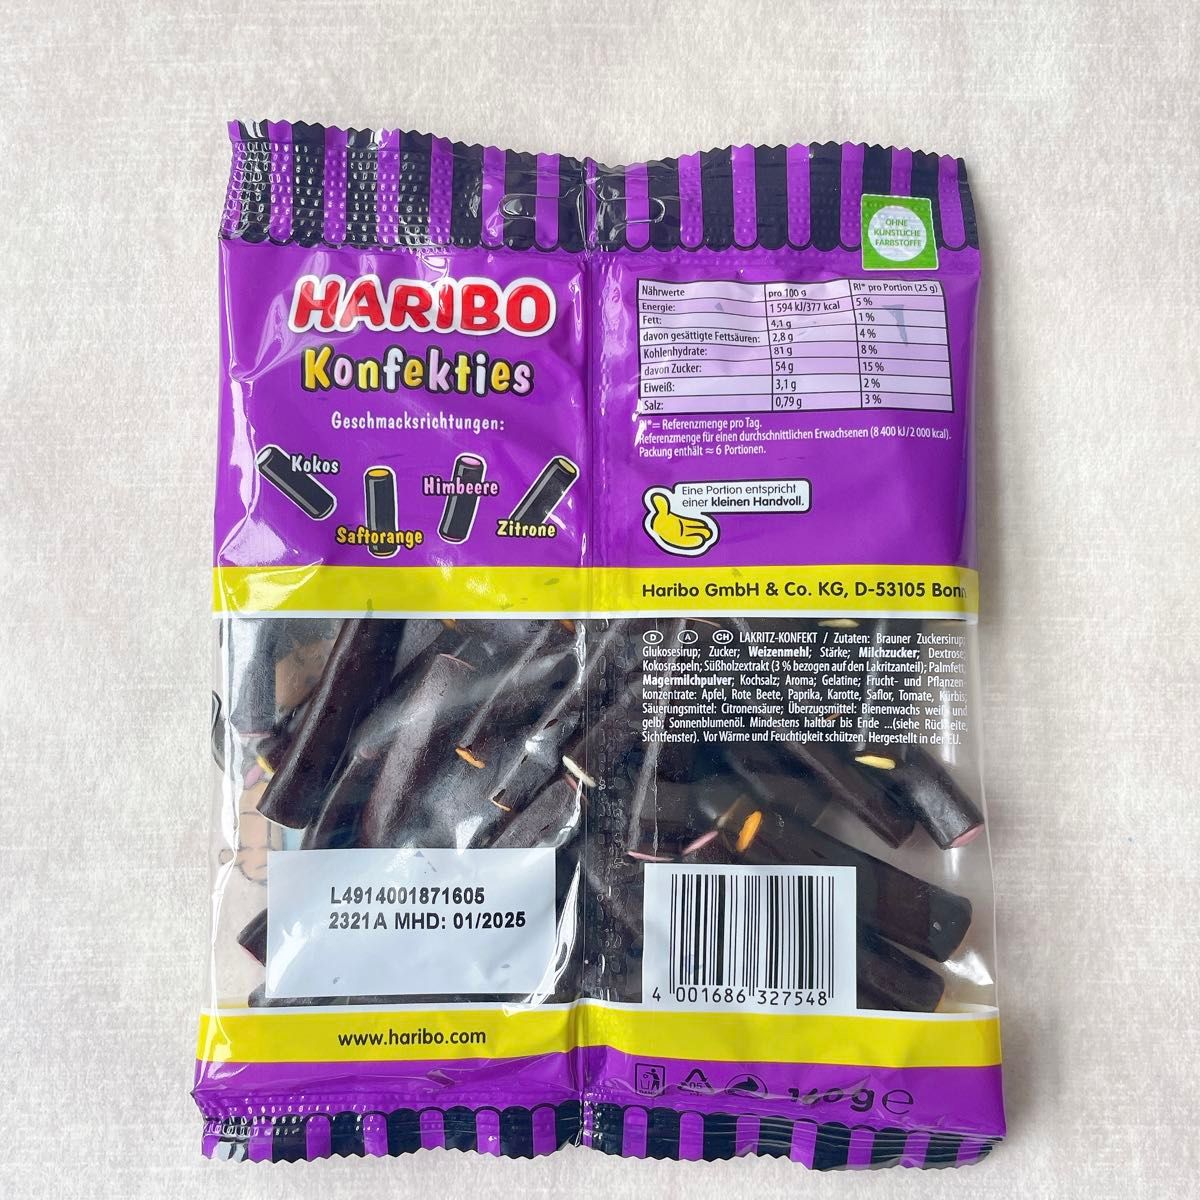 HARIBO【日本未販売】konfekties 160gリコリスソフトキャンディ